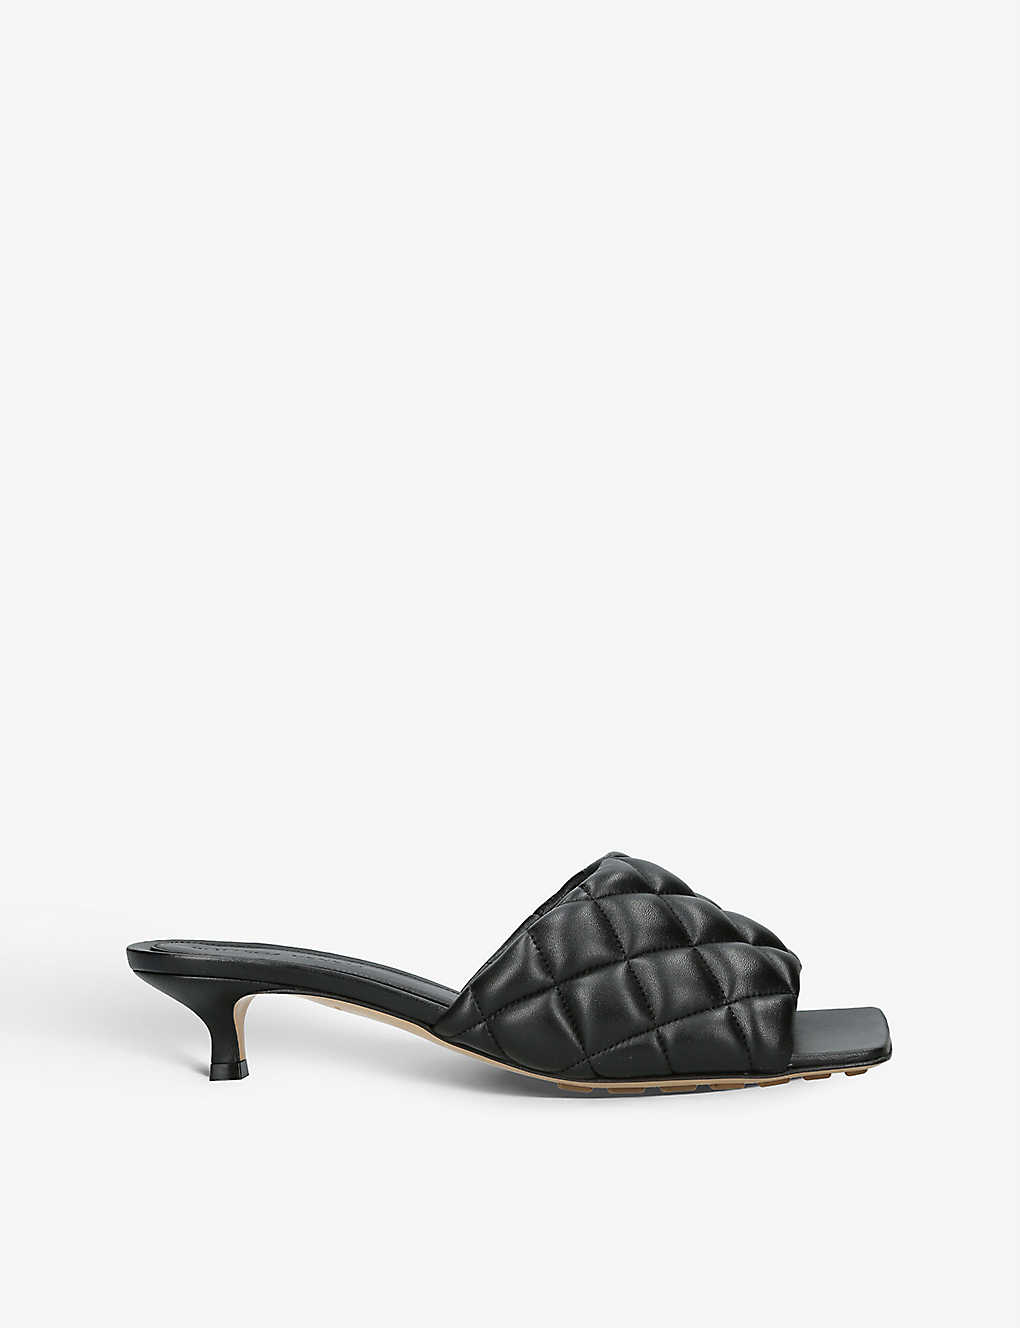 Shop Bottega Veneta Womens Black Padded Quilted-leather Heeled Mules